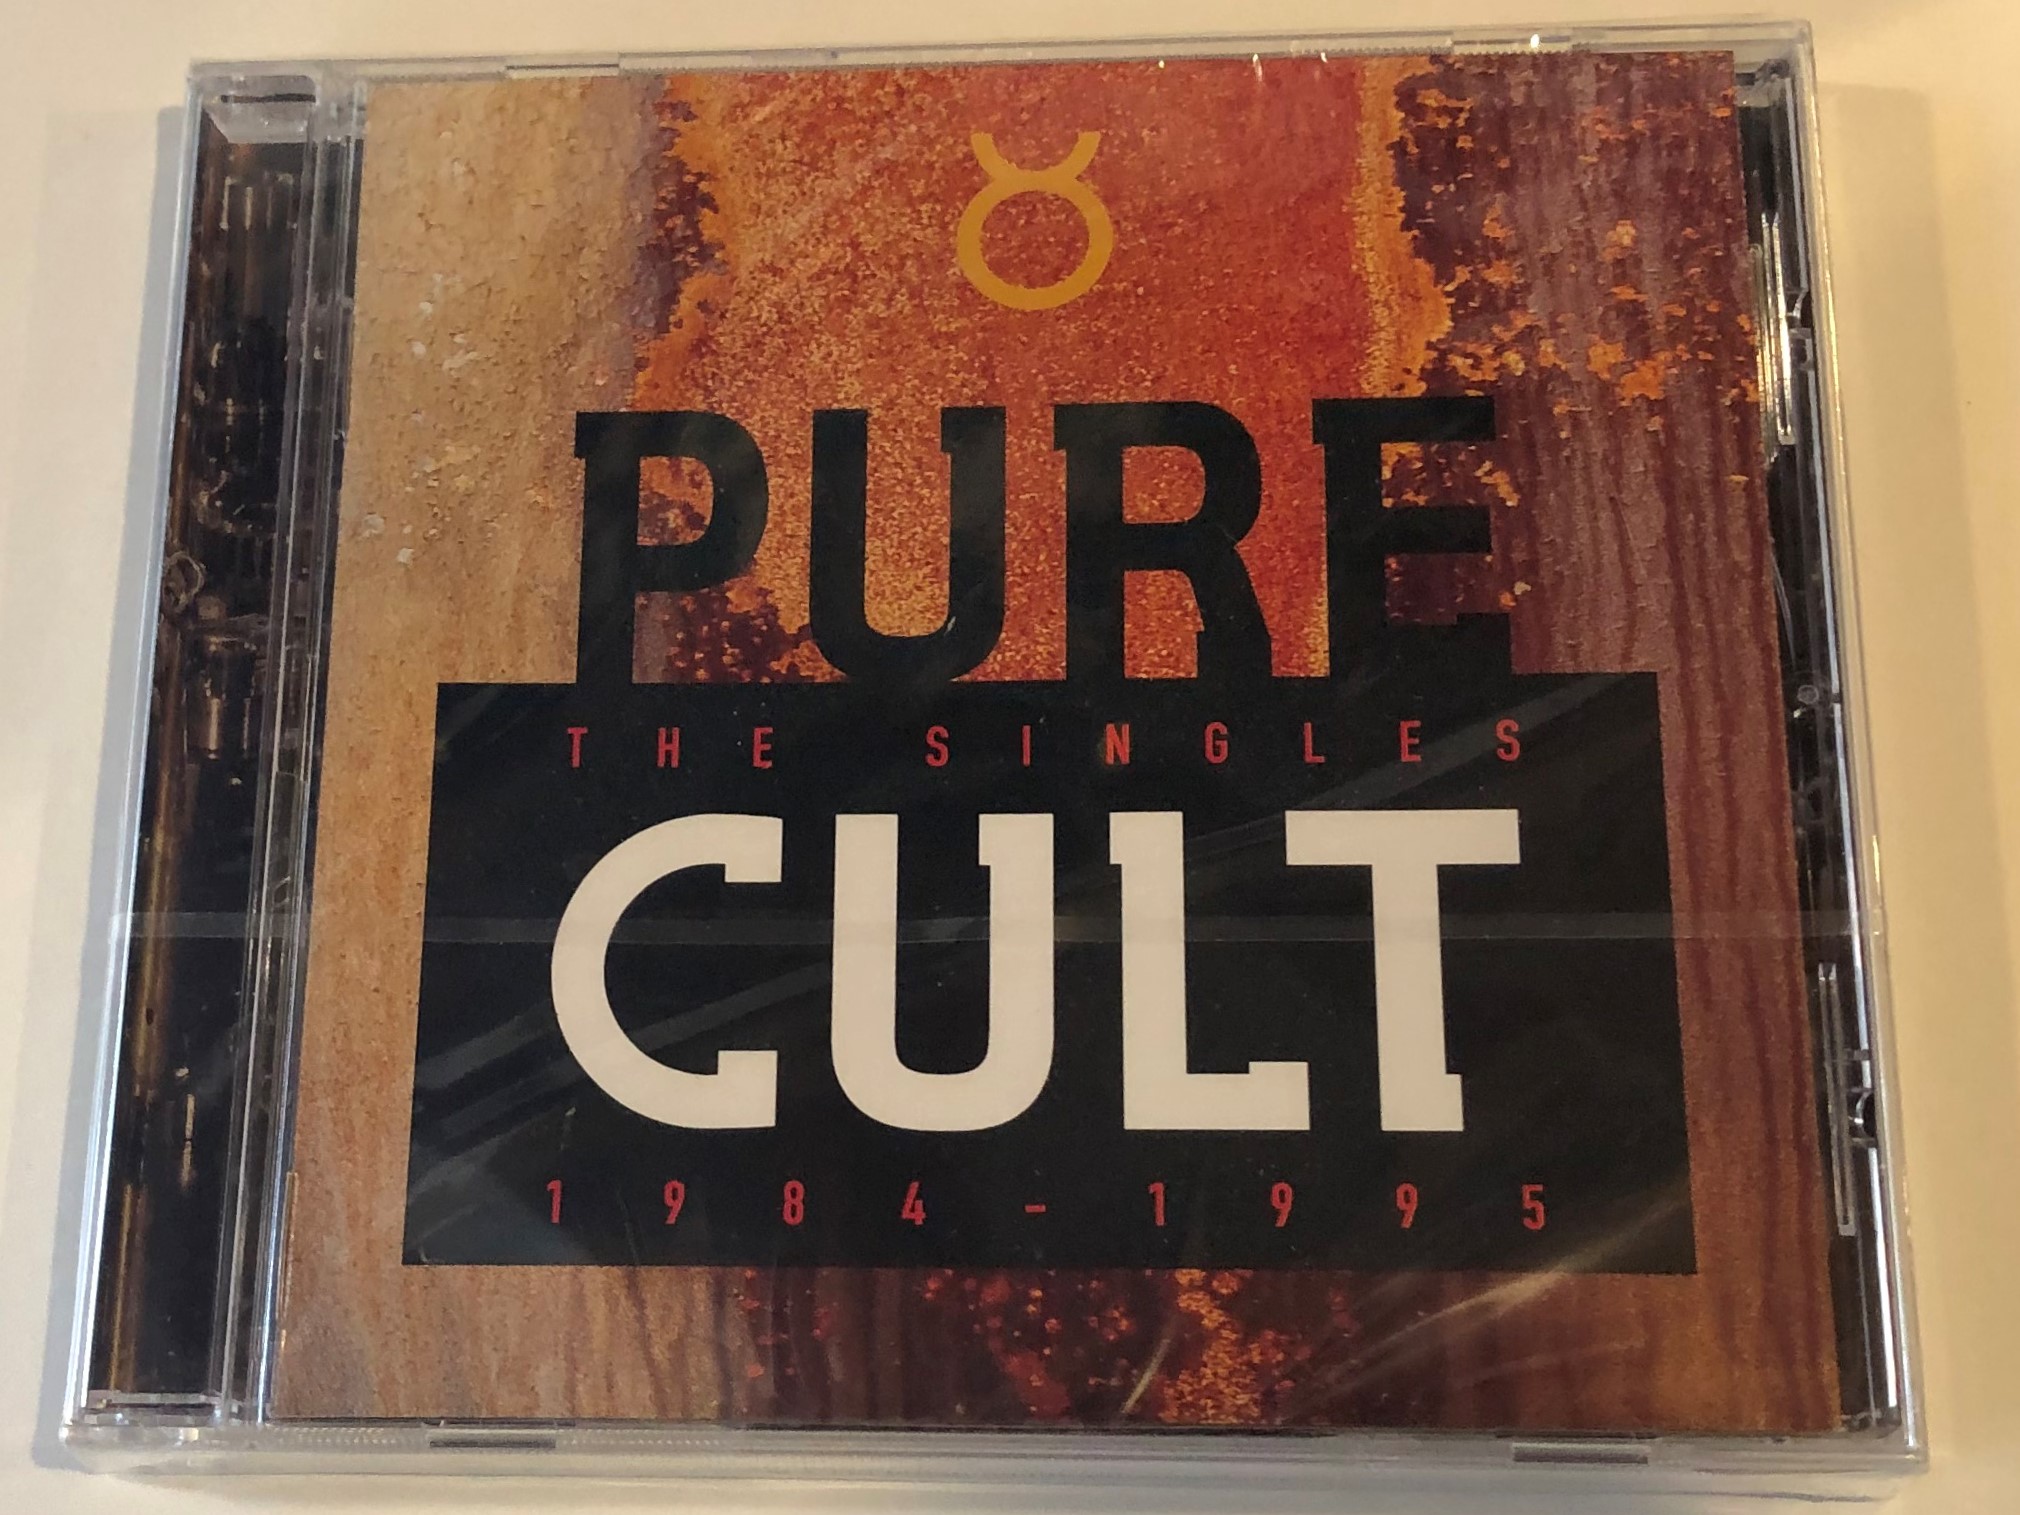 pure-cult-the-singles-1984-1995-beggars-banquet-audio-cd-2000-bbqmcd2026-1-.jpg